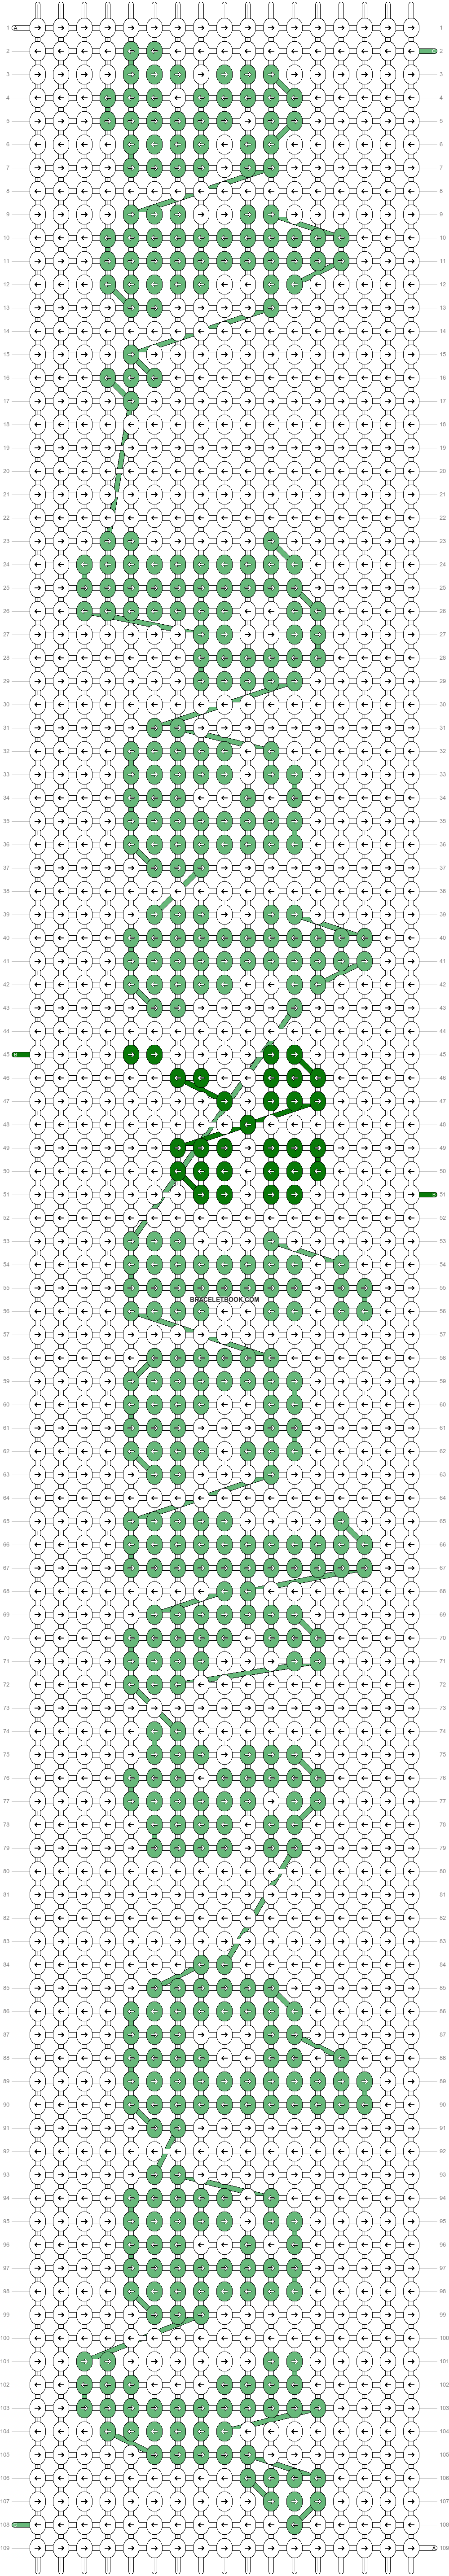 Alpha pattern #58113 pattern